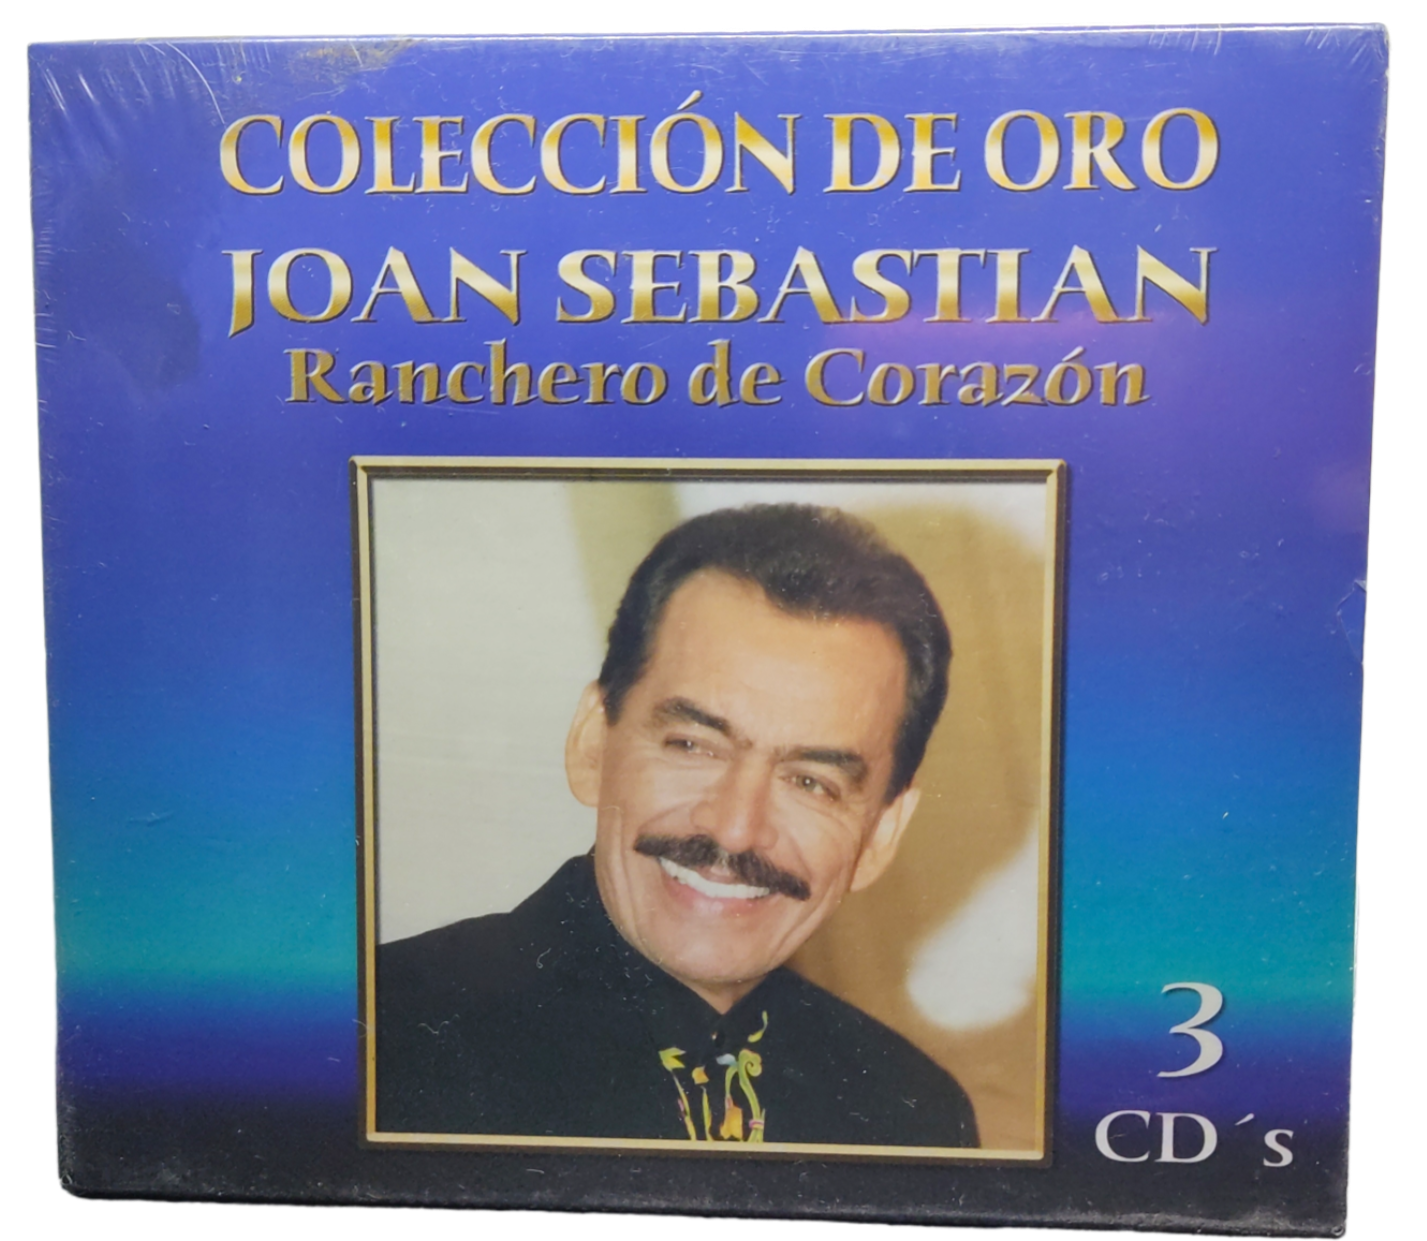 joan sebastian  - colección de oro - ranchero de corazon